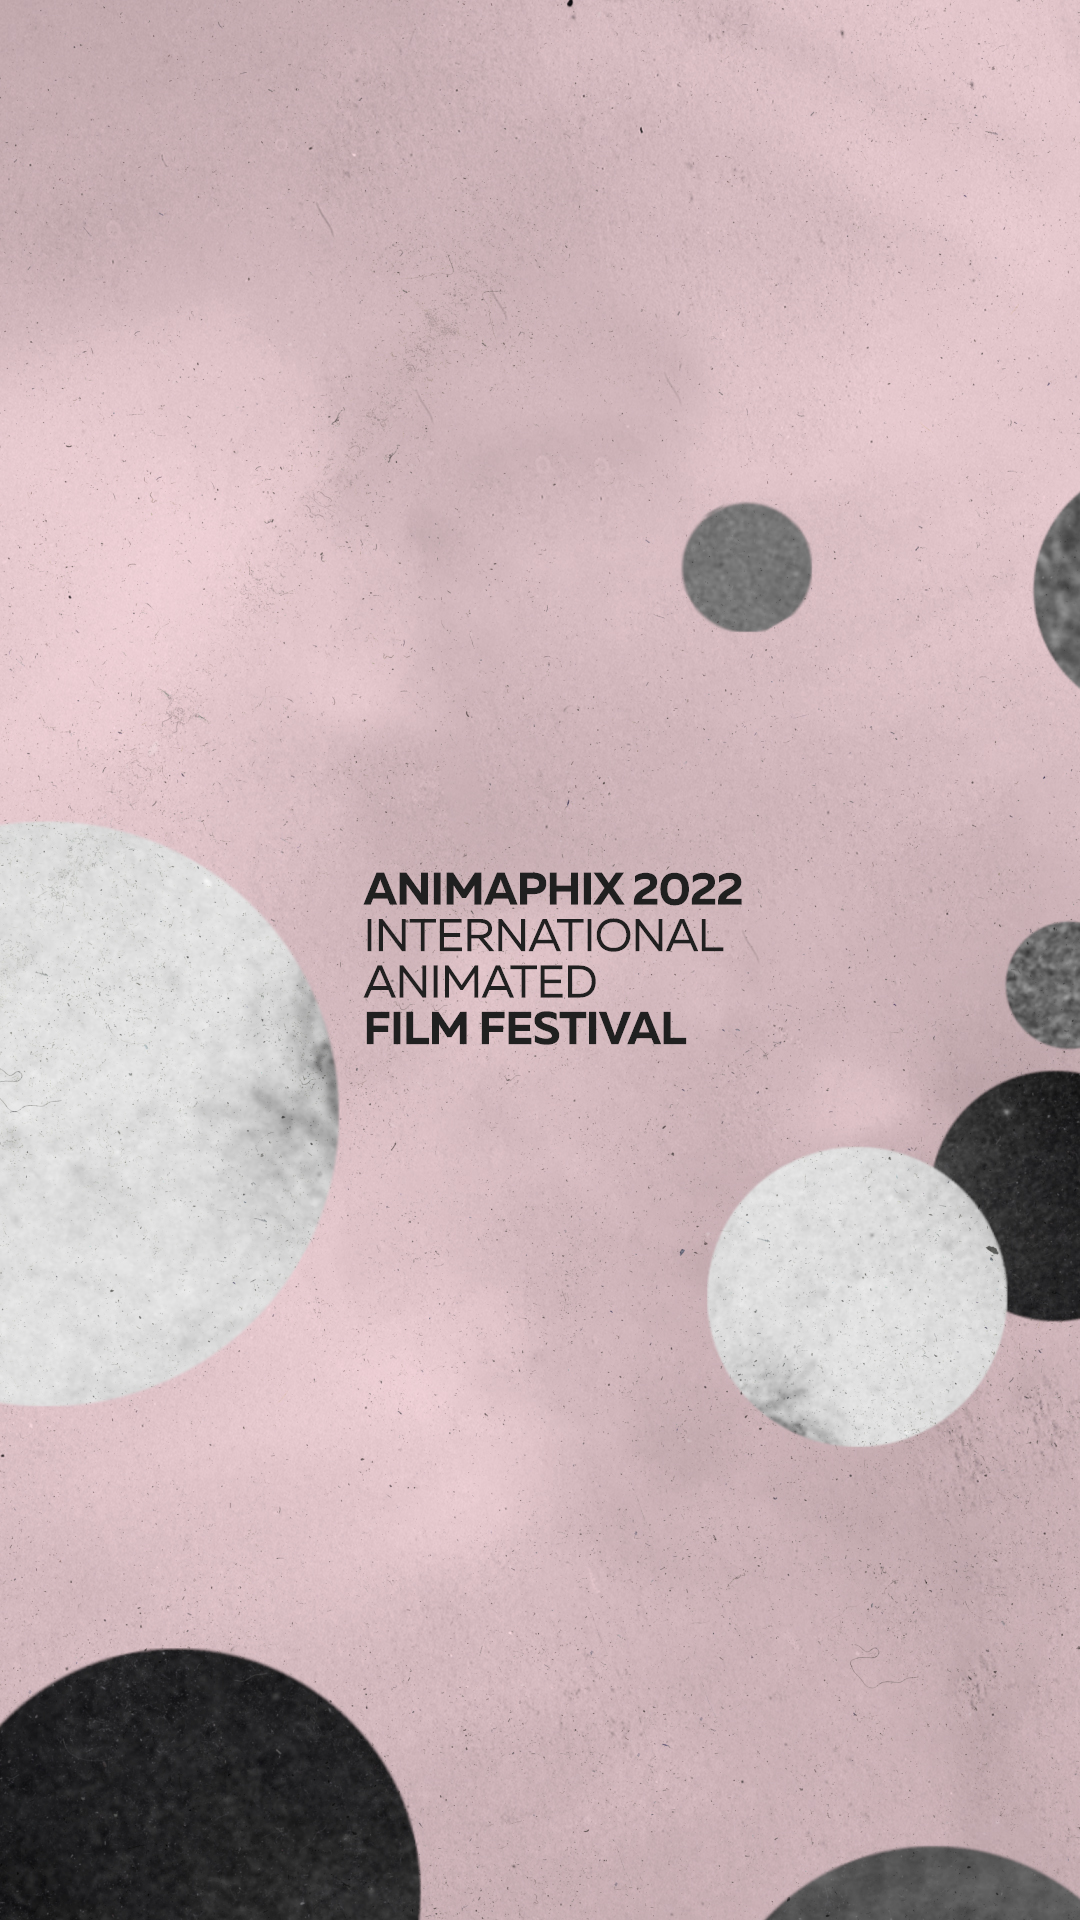 Gianluca Abbate / Animaphix 2022